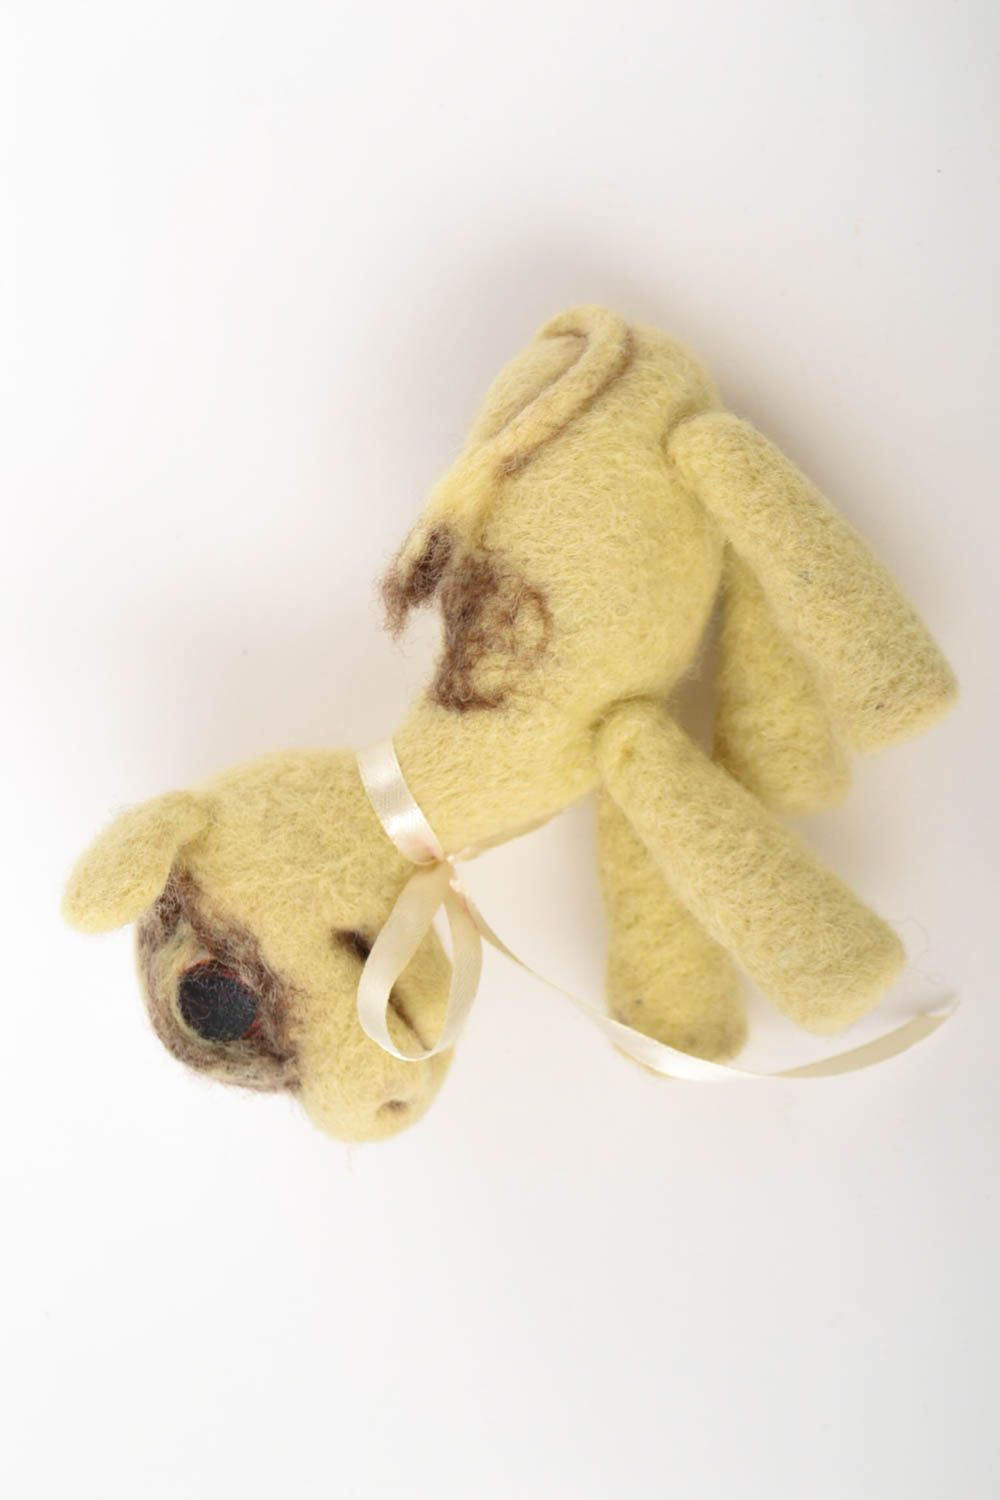 Handmade toy woolen toy for nursery decor ideas interior toy soft toys photo 4